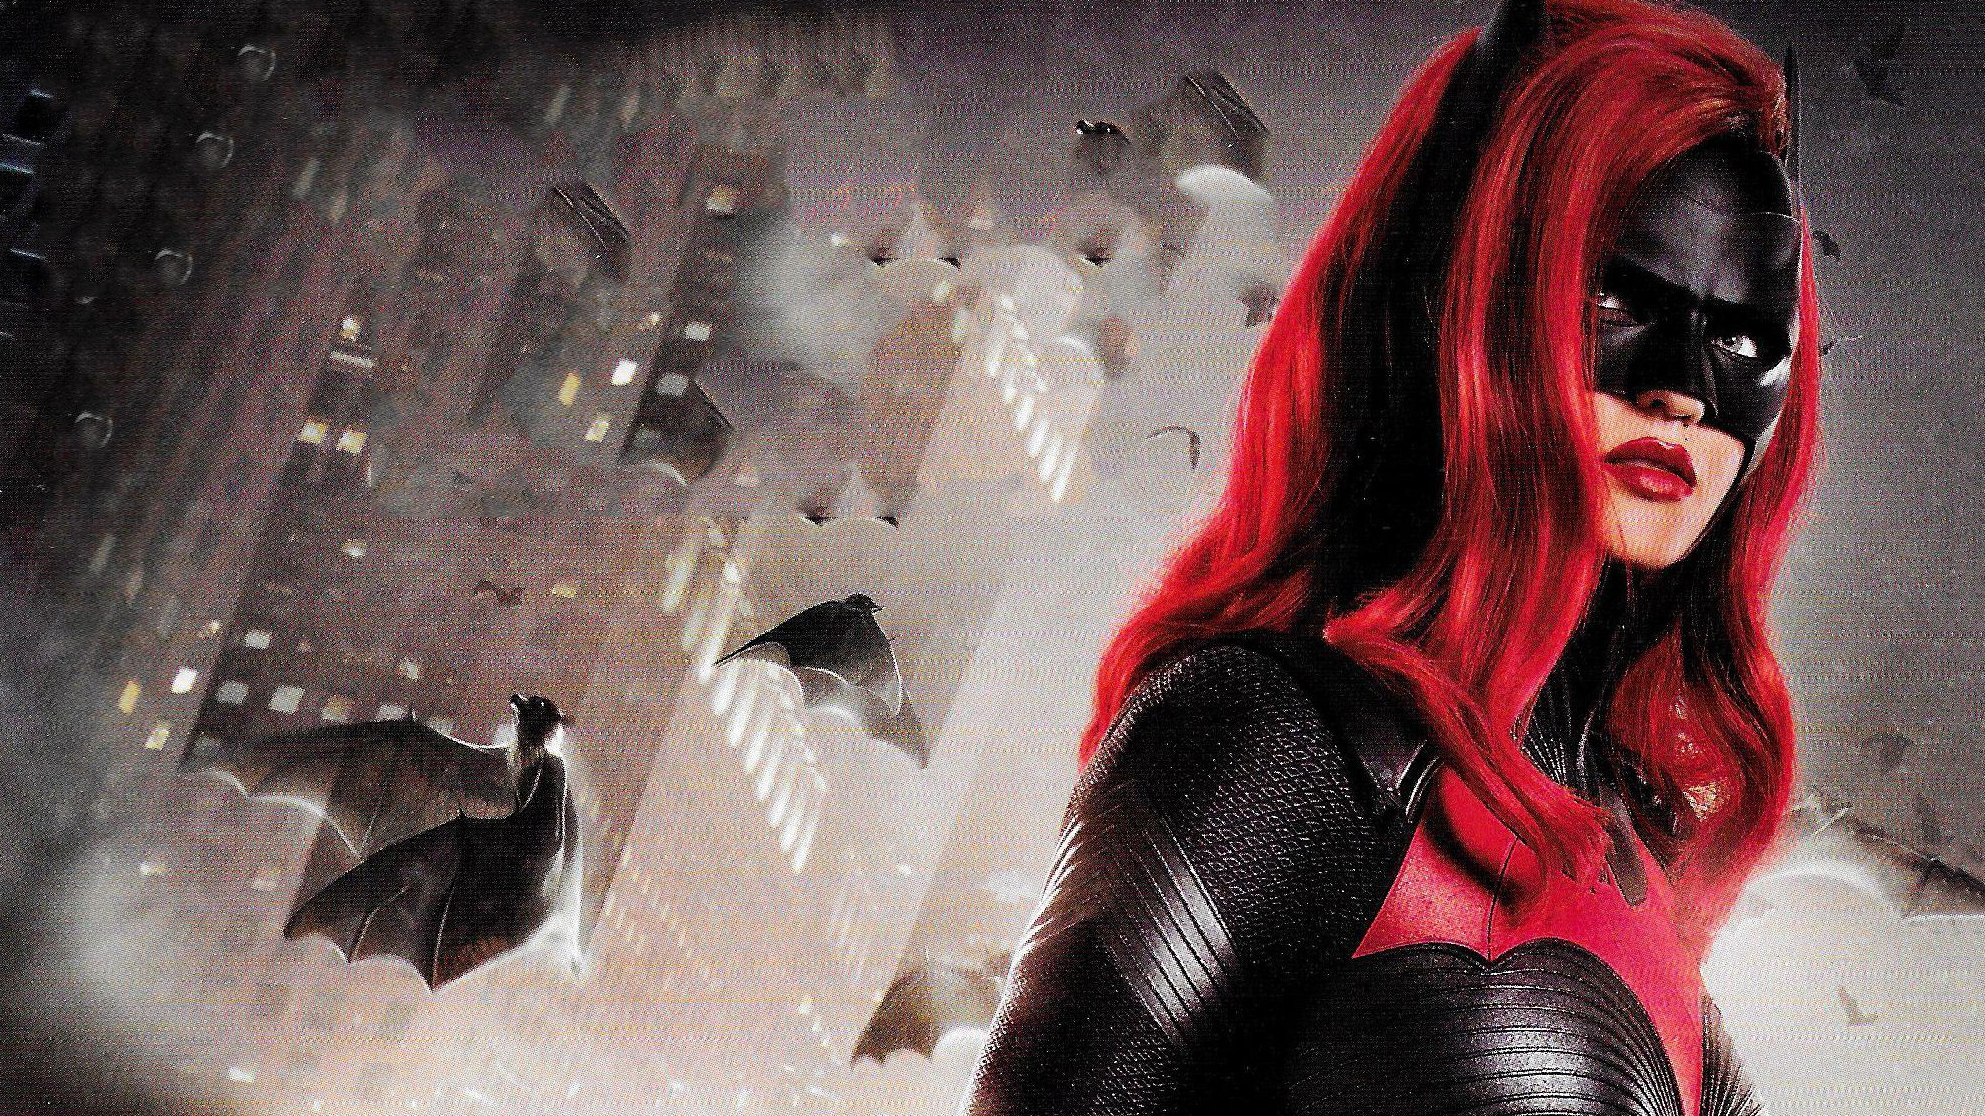 Ruby Rose As Batwoman 2019 Tv Series, HD Tv Shows, 4k